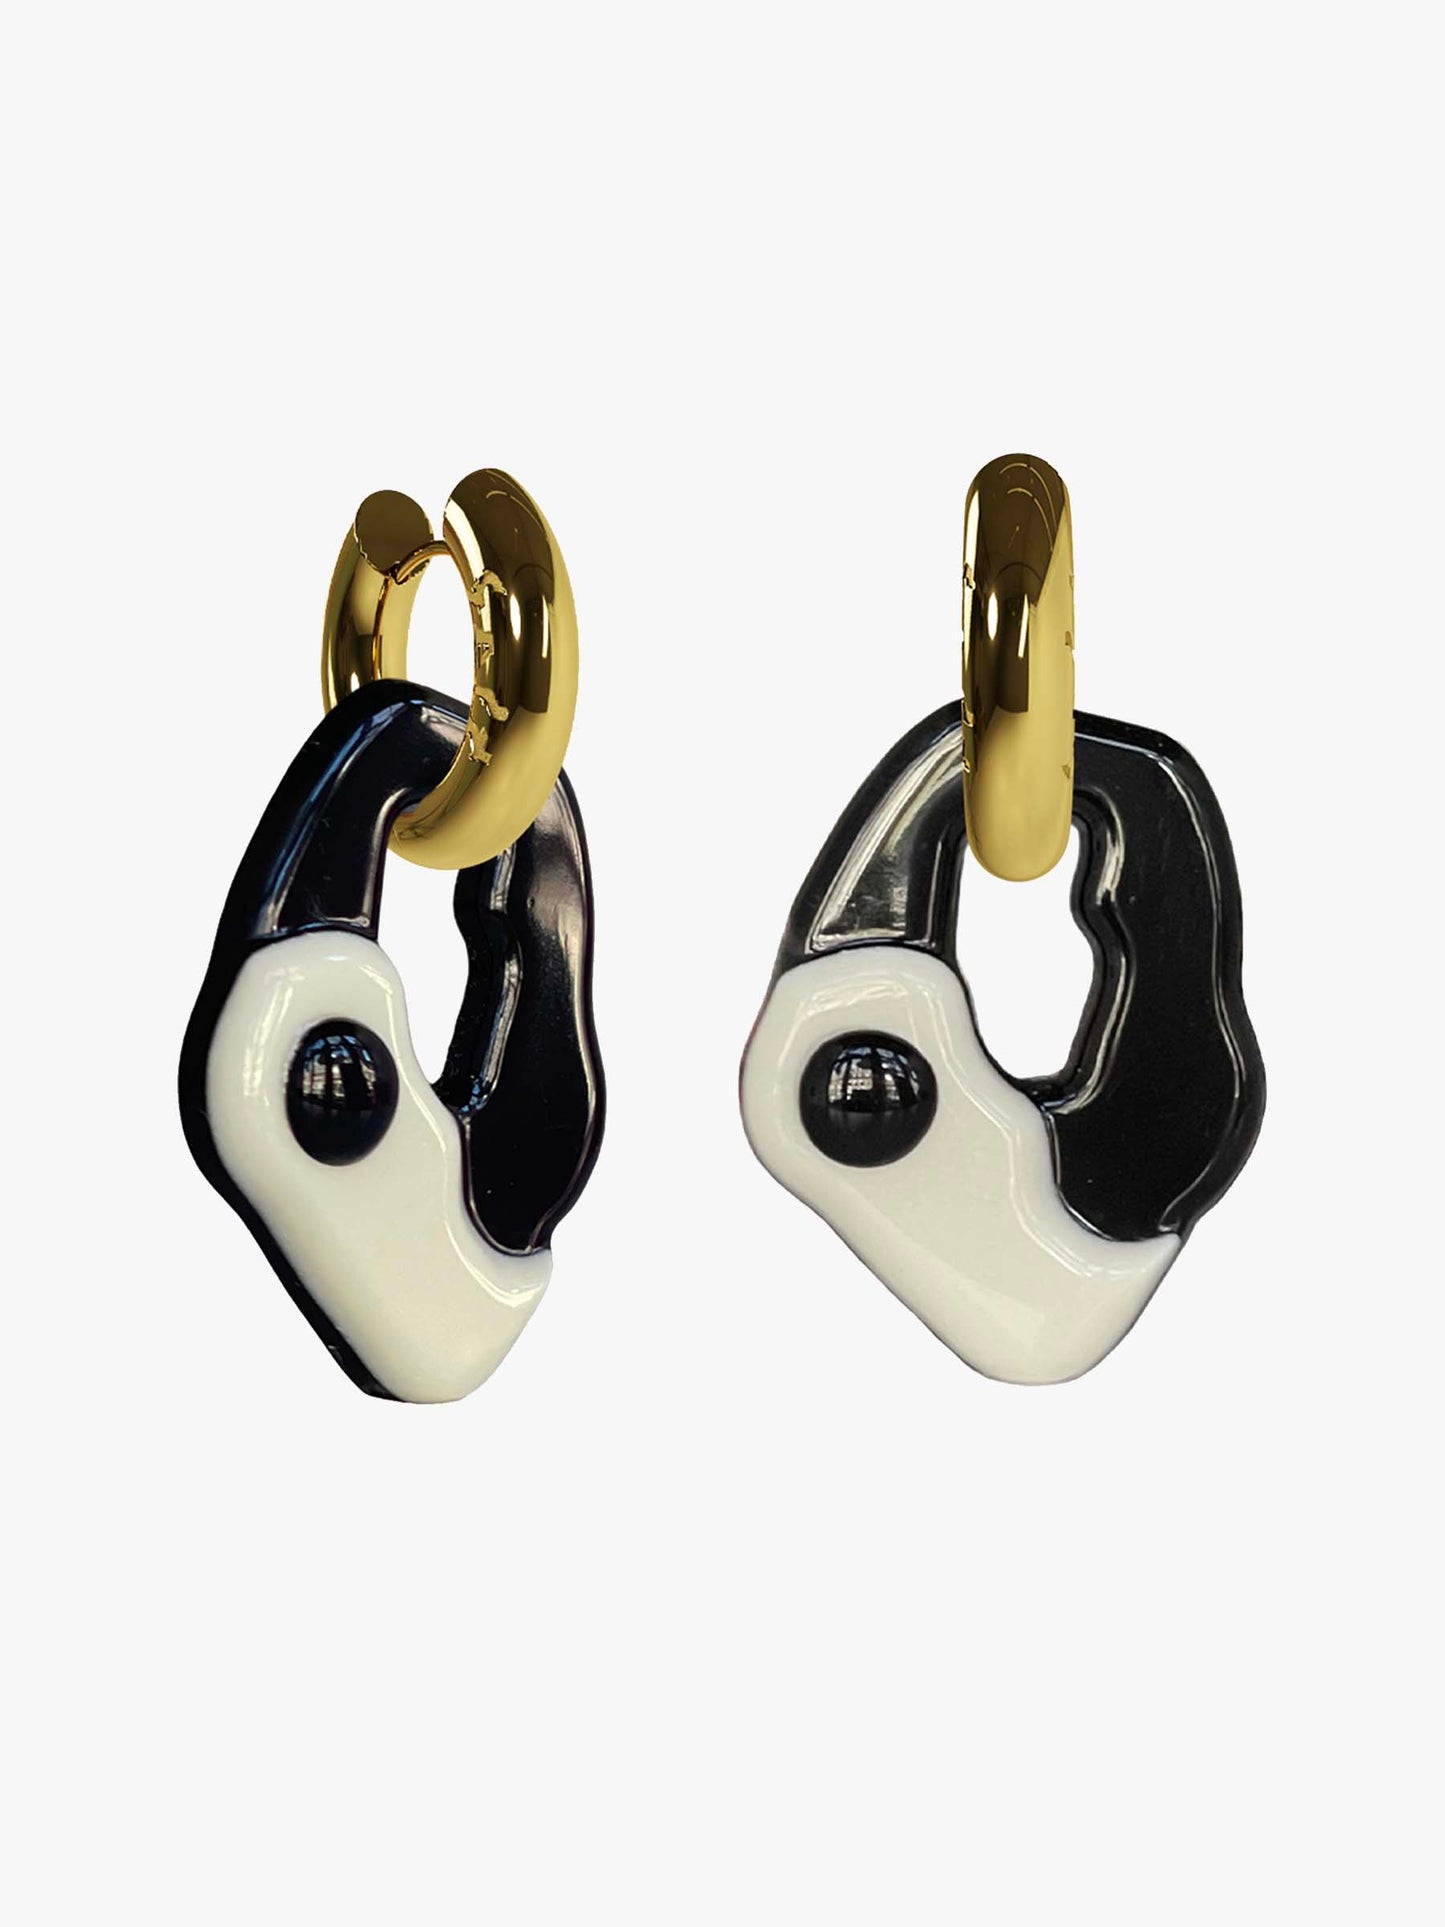 Yin Yang black white gold earring (pair)